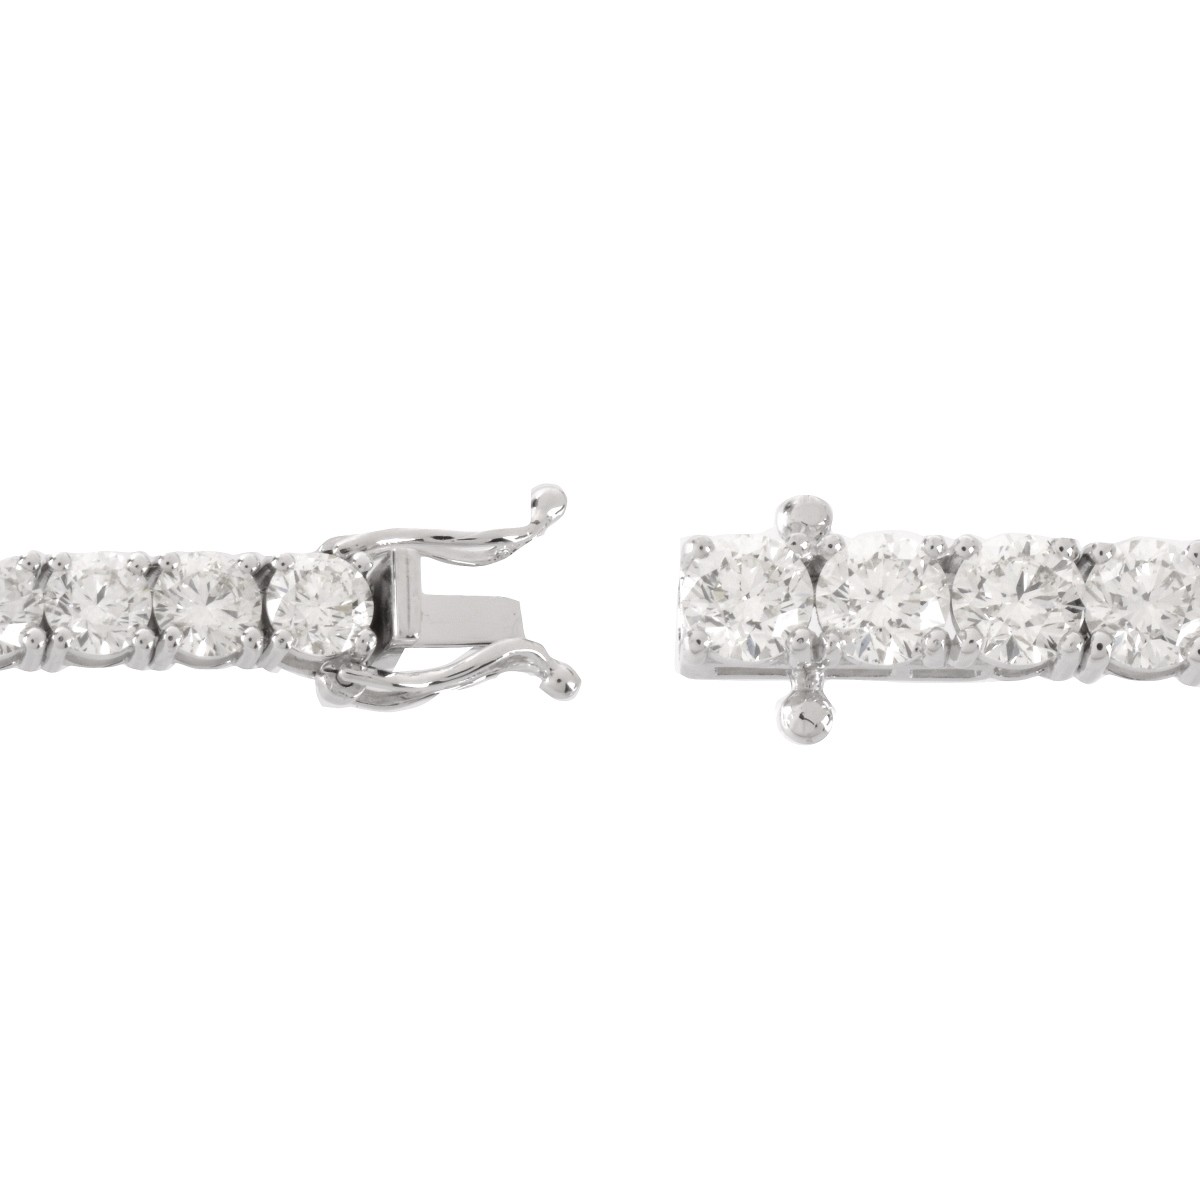 10.75 Carat Diamond Tennis Bracelet